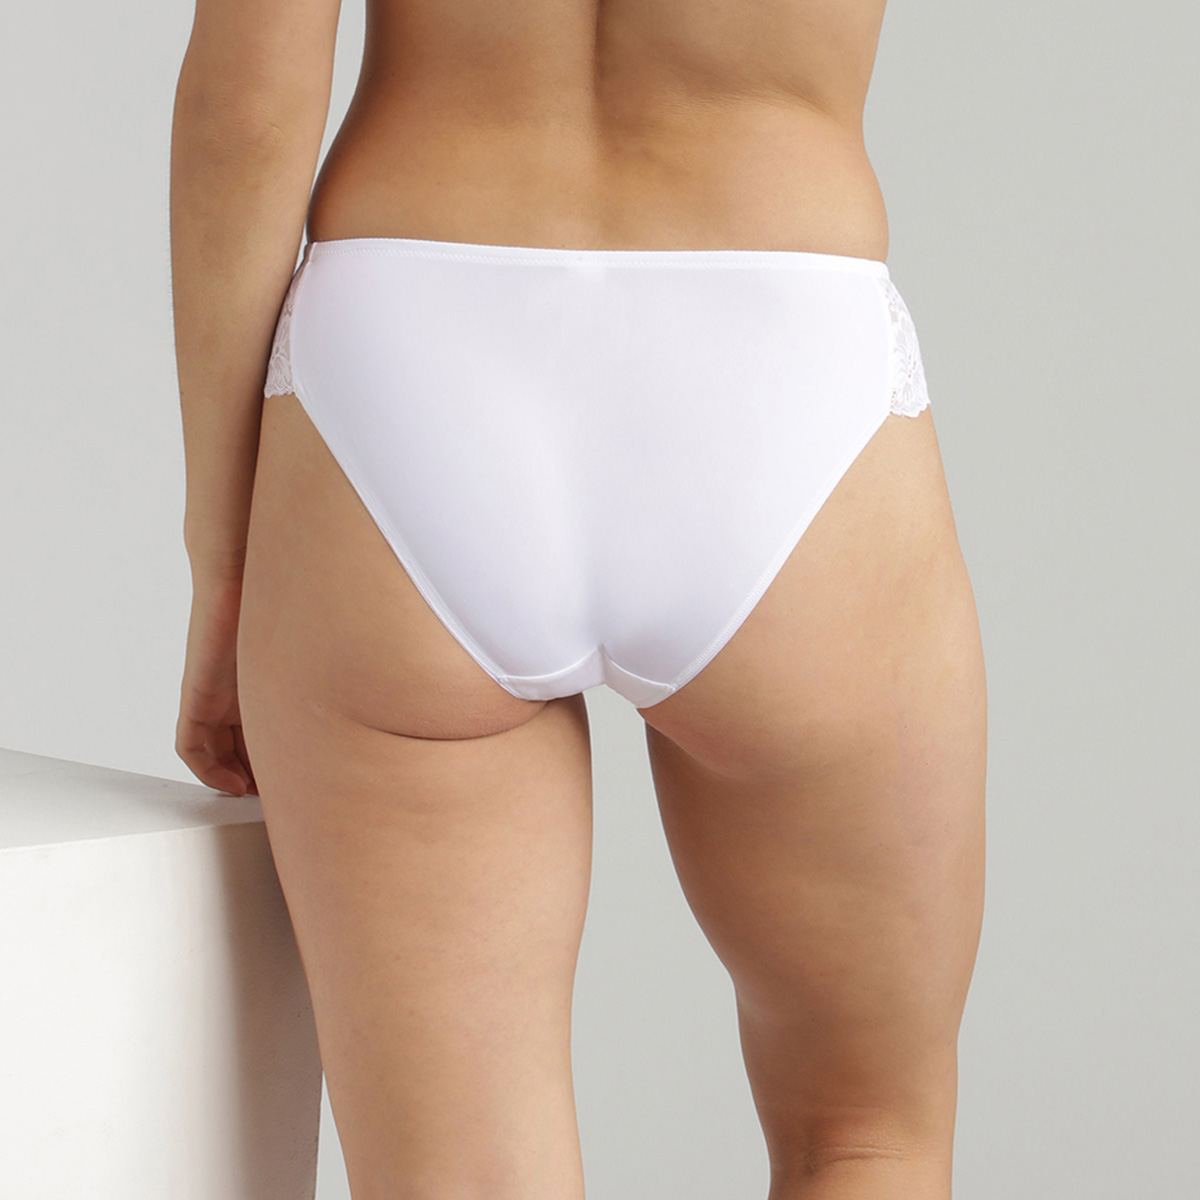 Bikini Knickers in White Lace Essential Elegance, , PLAYTEX